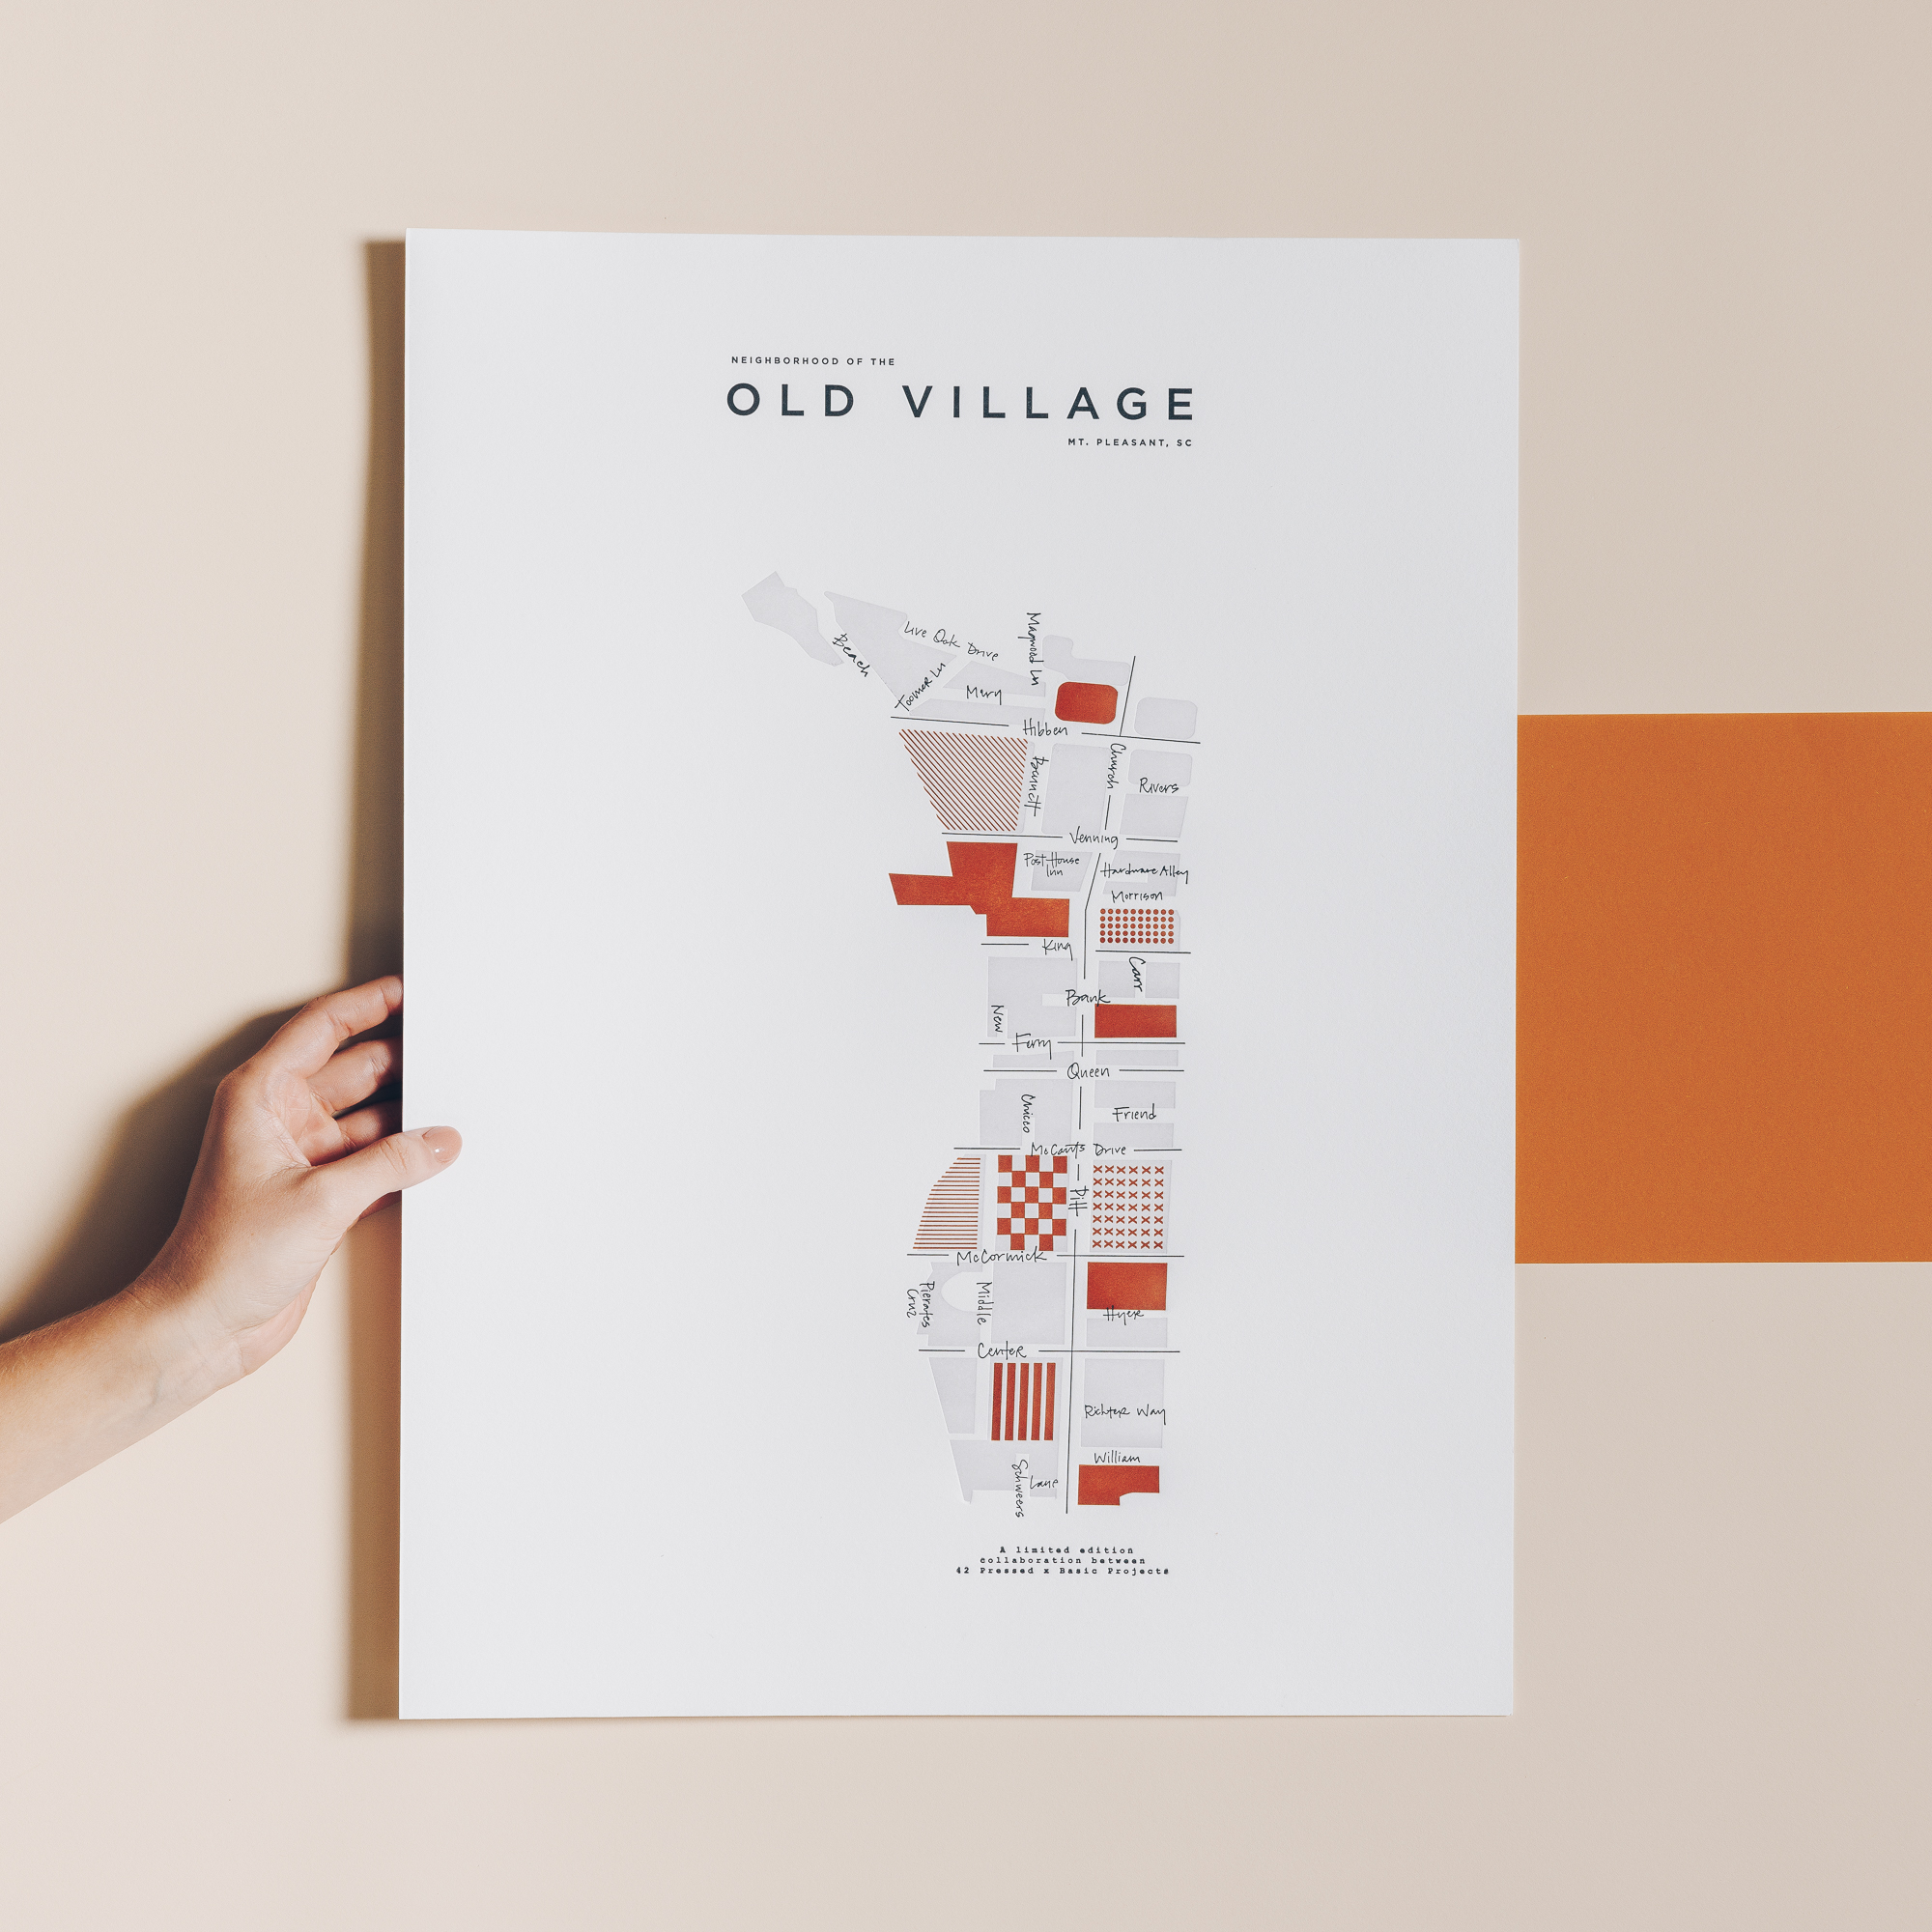 Old Village Map Print